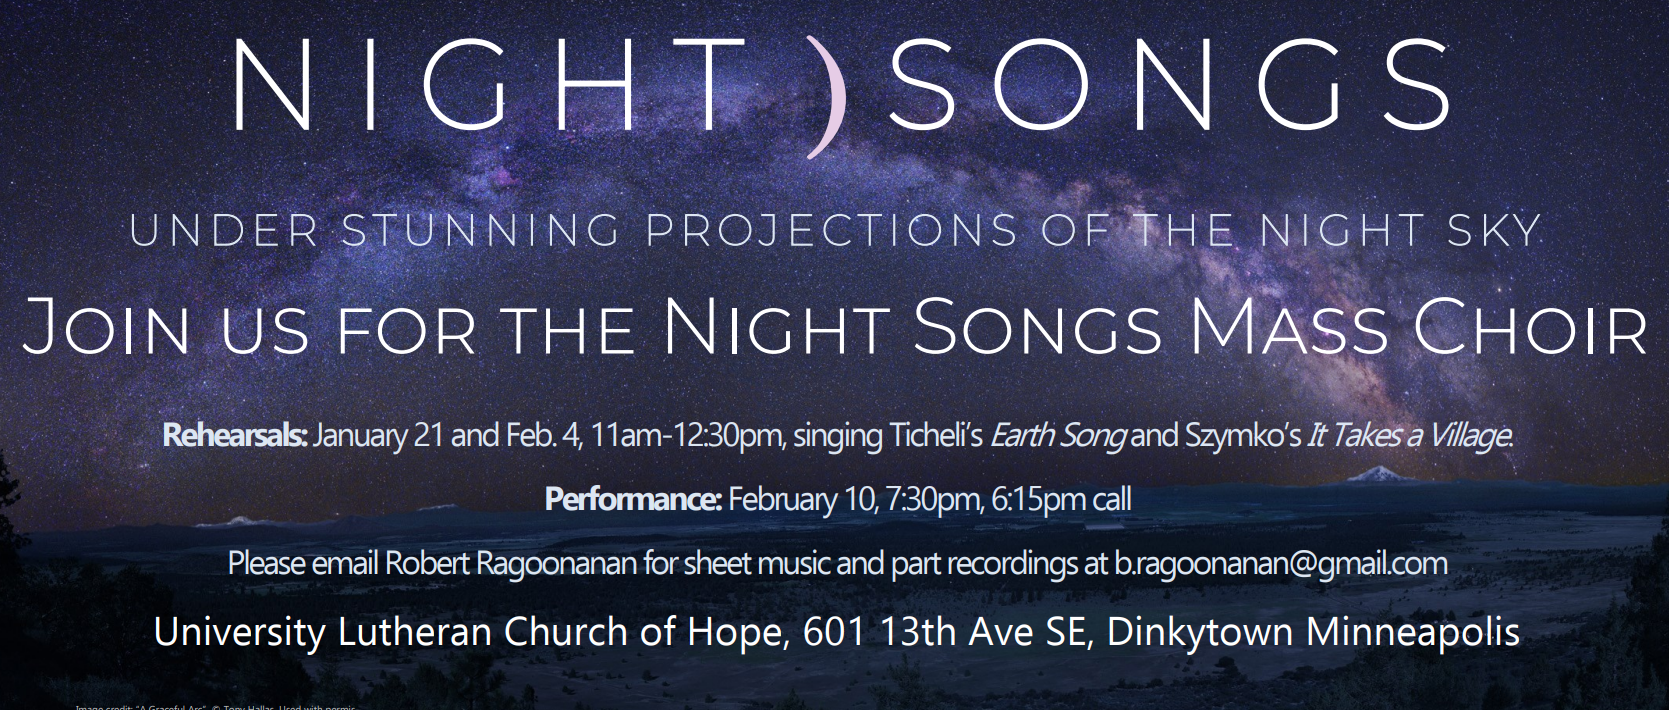 Night Songs Mass Choir Invitation